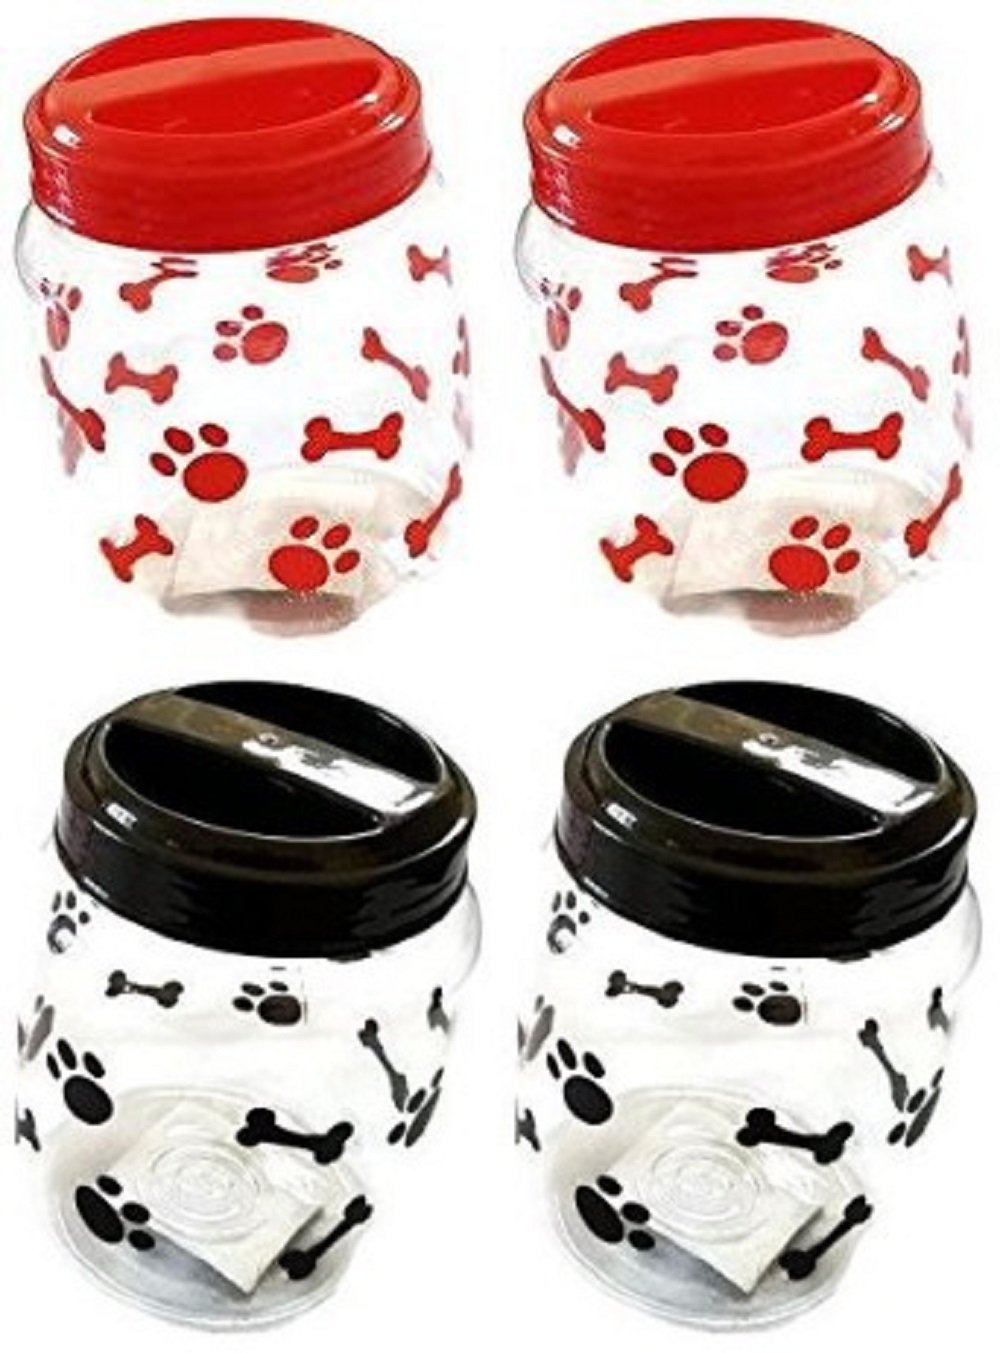 [Australia] - Greenbrier Pet Food Treats Plastic Storage Jars, Paws and Bones, Dogs and Cats, 4-jar Set 